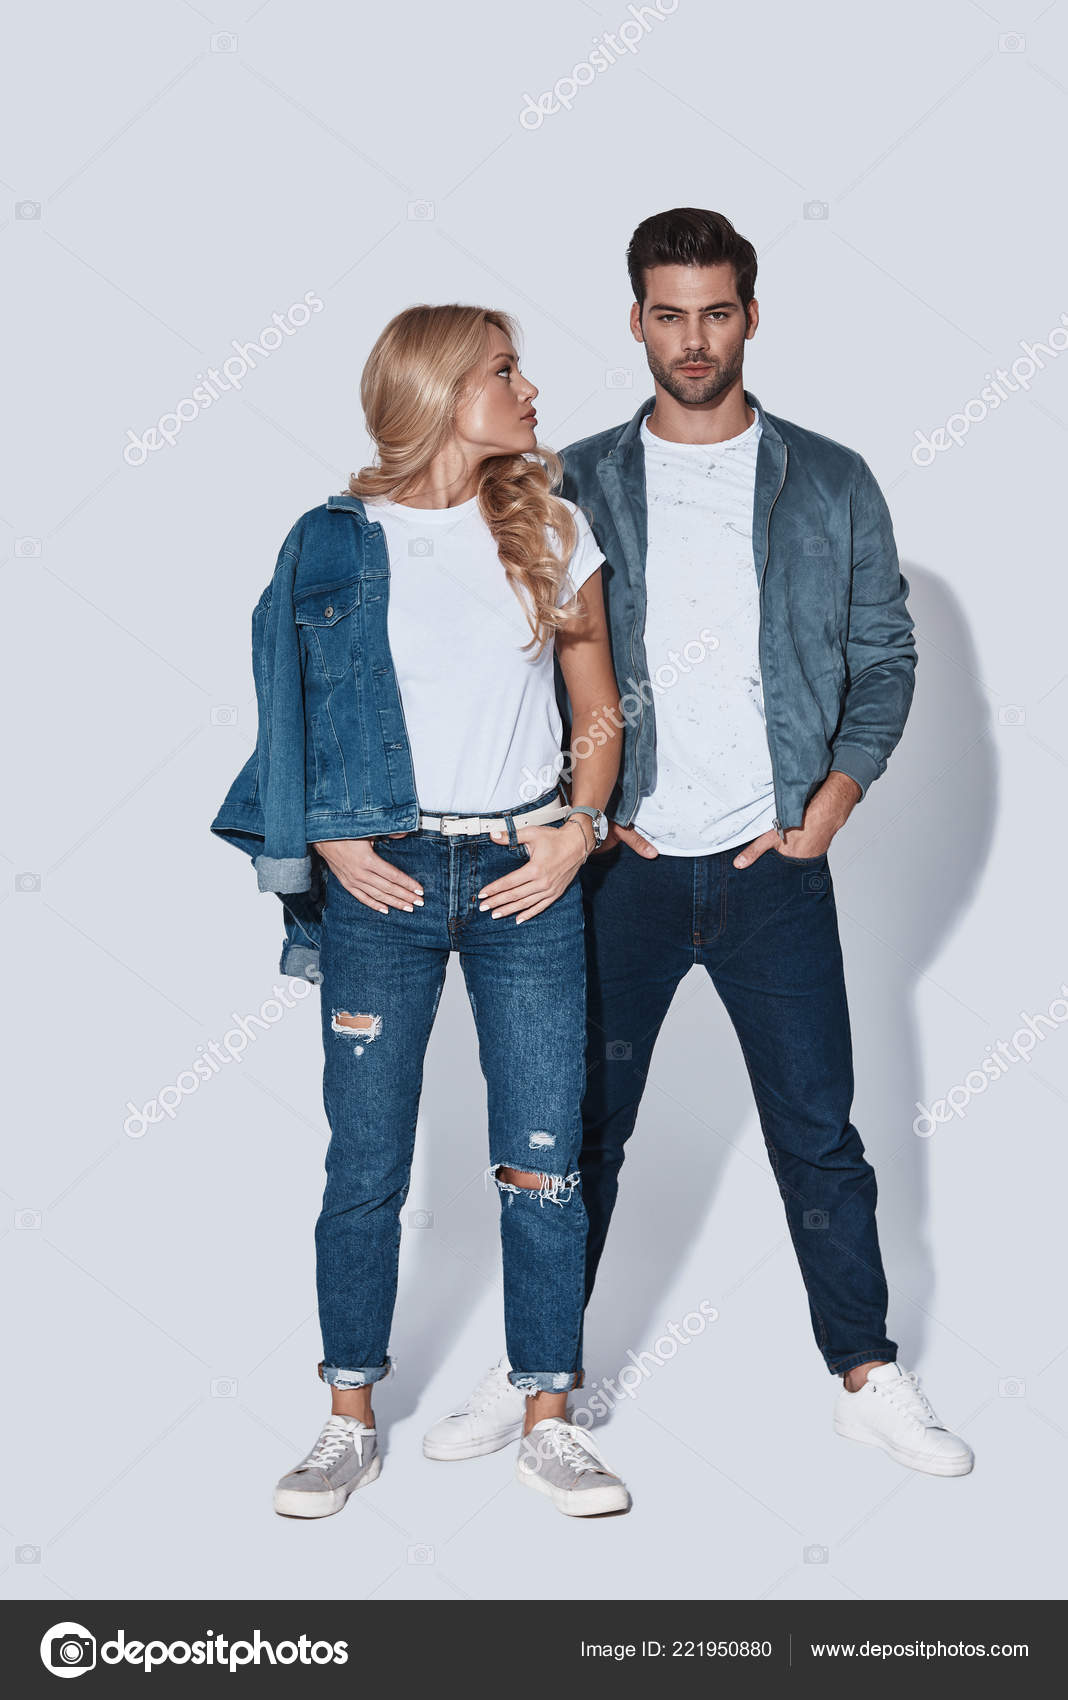 https://st4.depositphotos.com/2931363/22195/i/1600/depositphotos_221950880-stock-photo-fashionable-couple-denim-wear-standing.jpg